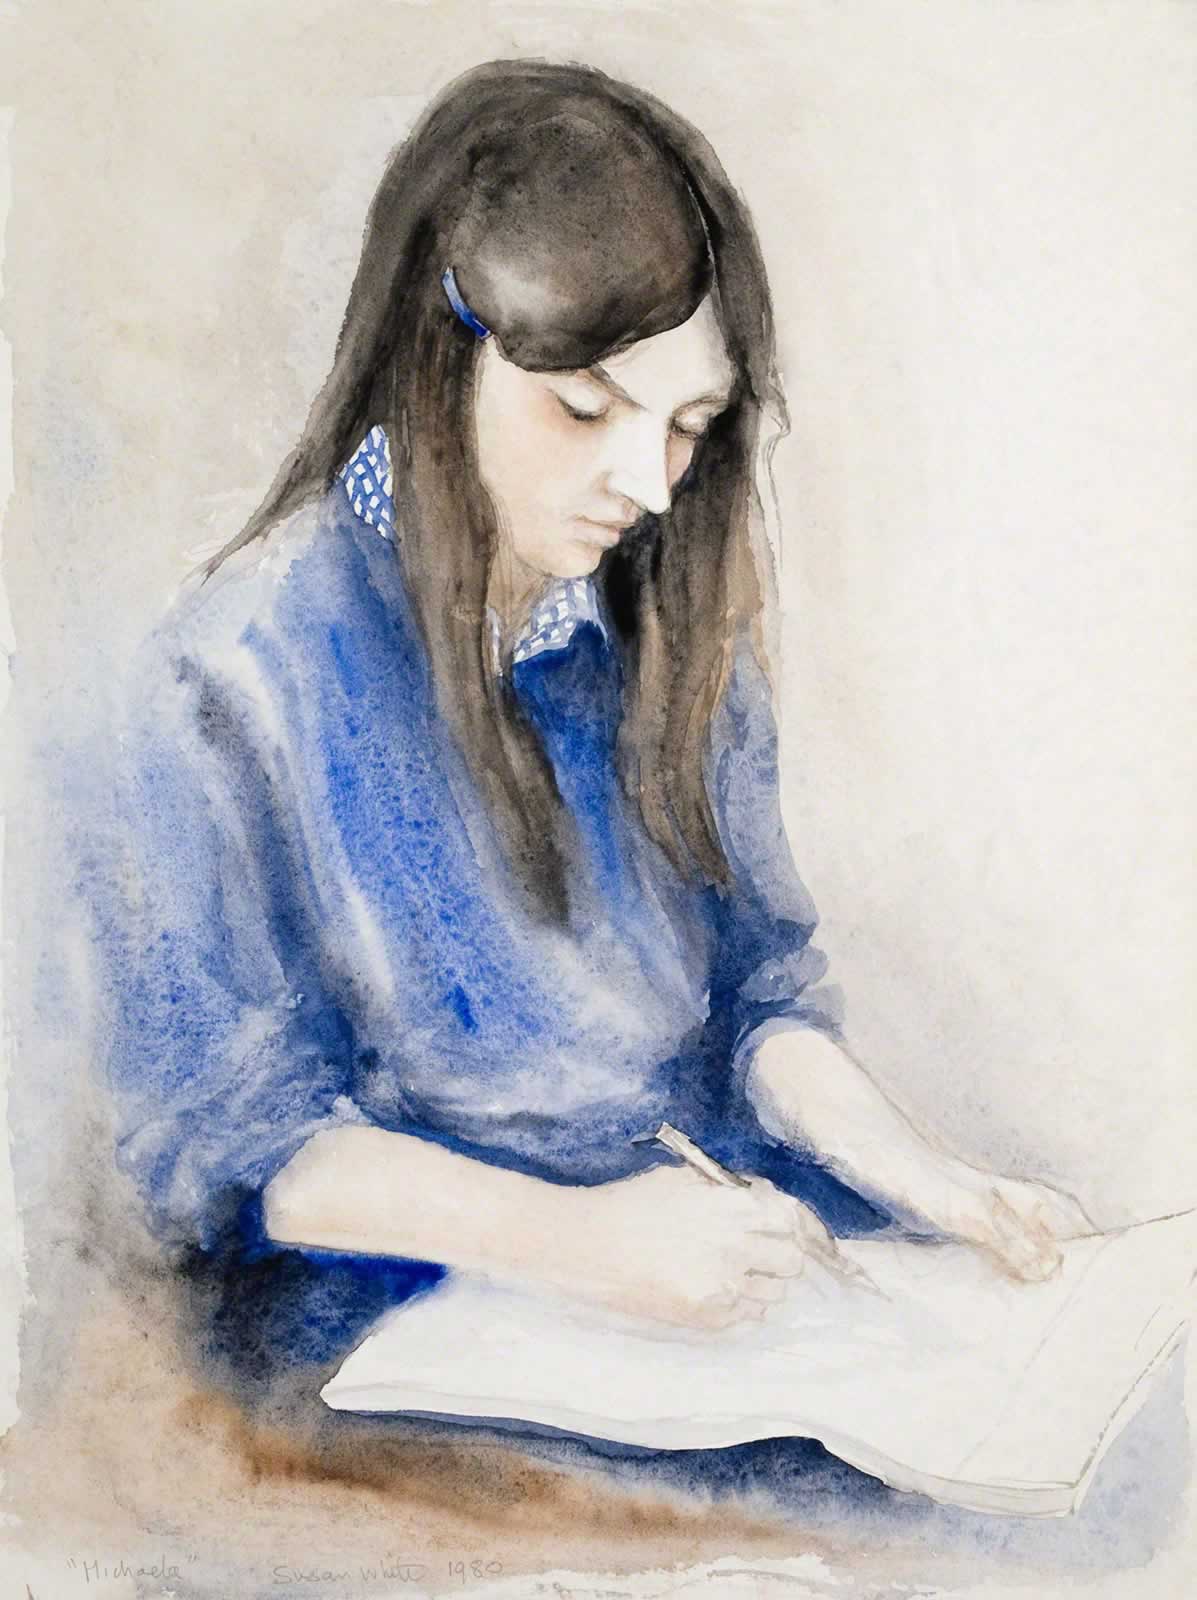 Michaela Drawing, in Ultramarine Sloppy-joe by Susan Dorothea White